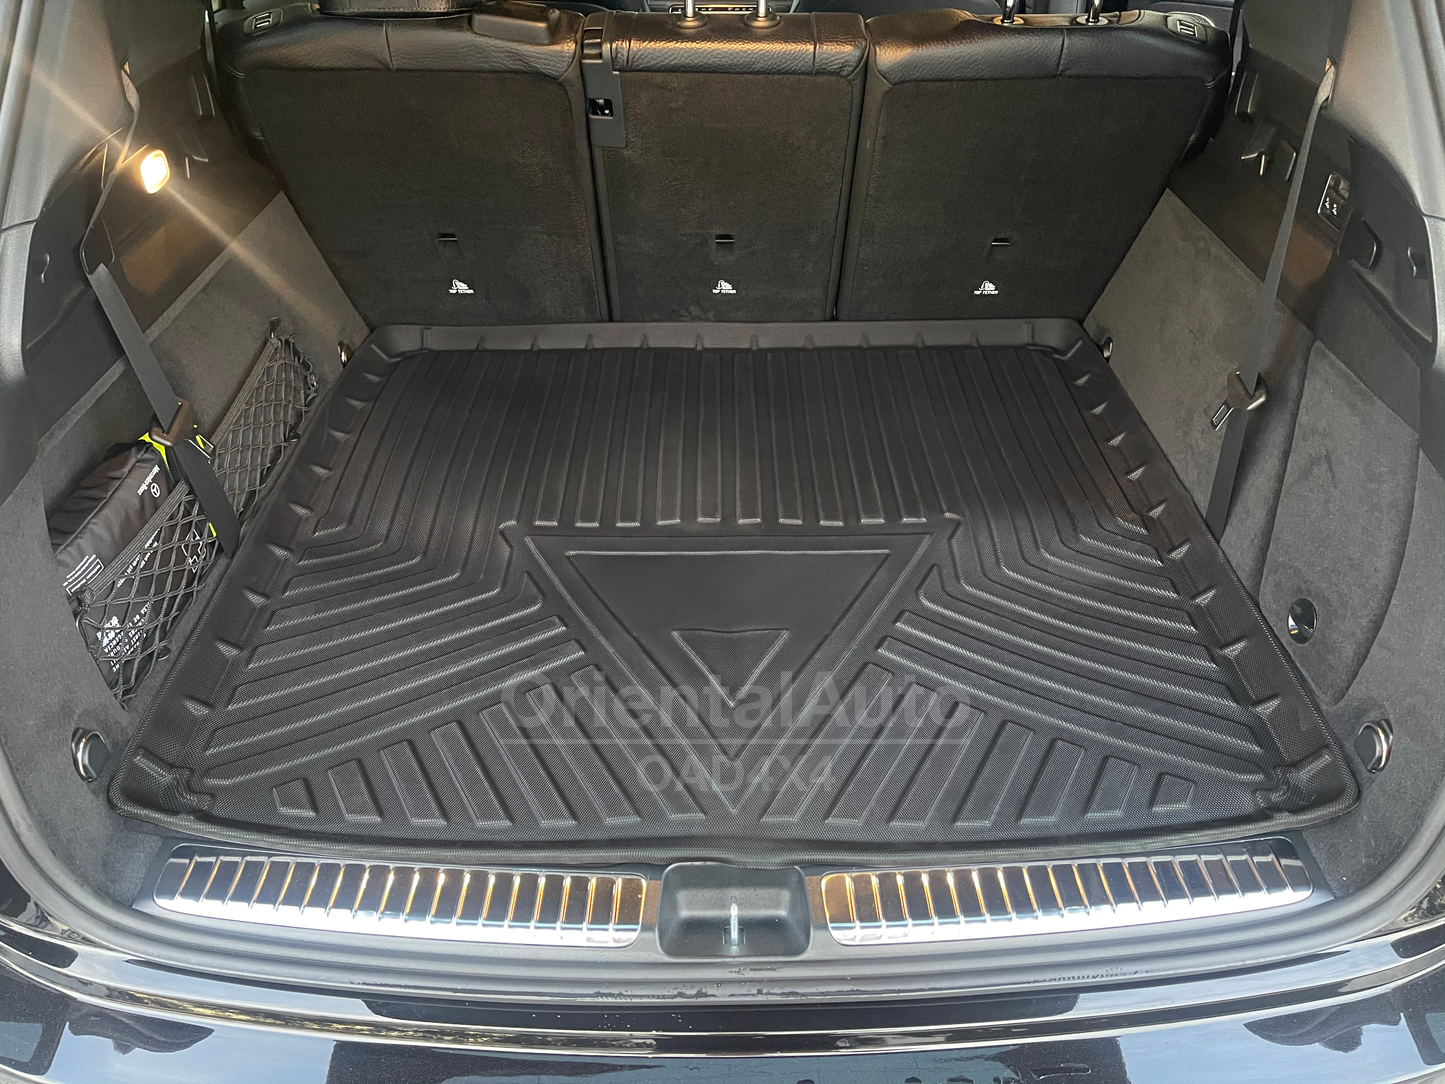 Luxury Weather Shields & 3D TPE Cargo Mat for Mercedes Benz GLE-CLASS V167 2019-Onwards Weathershields Window Visor Boot Mat